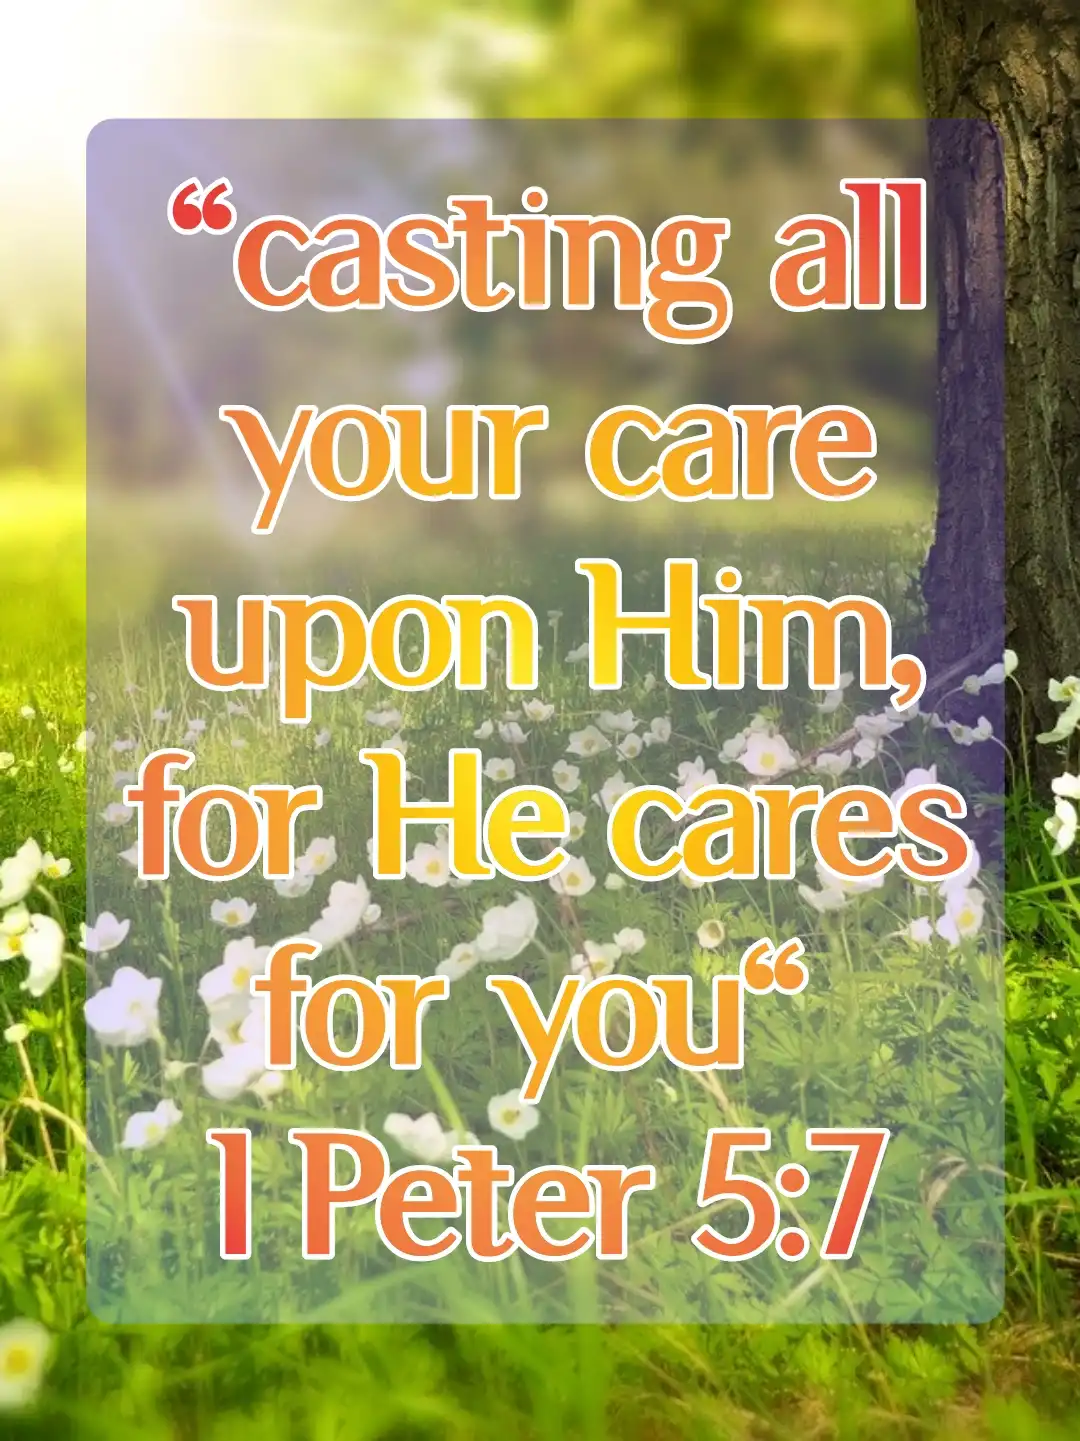 heart touching bible verses (1 Peter 5:7)